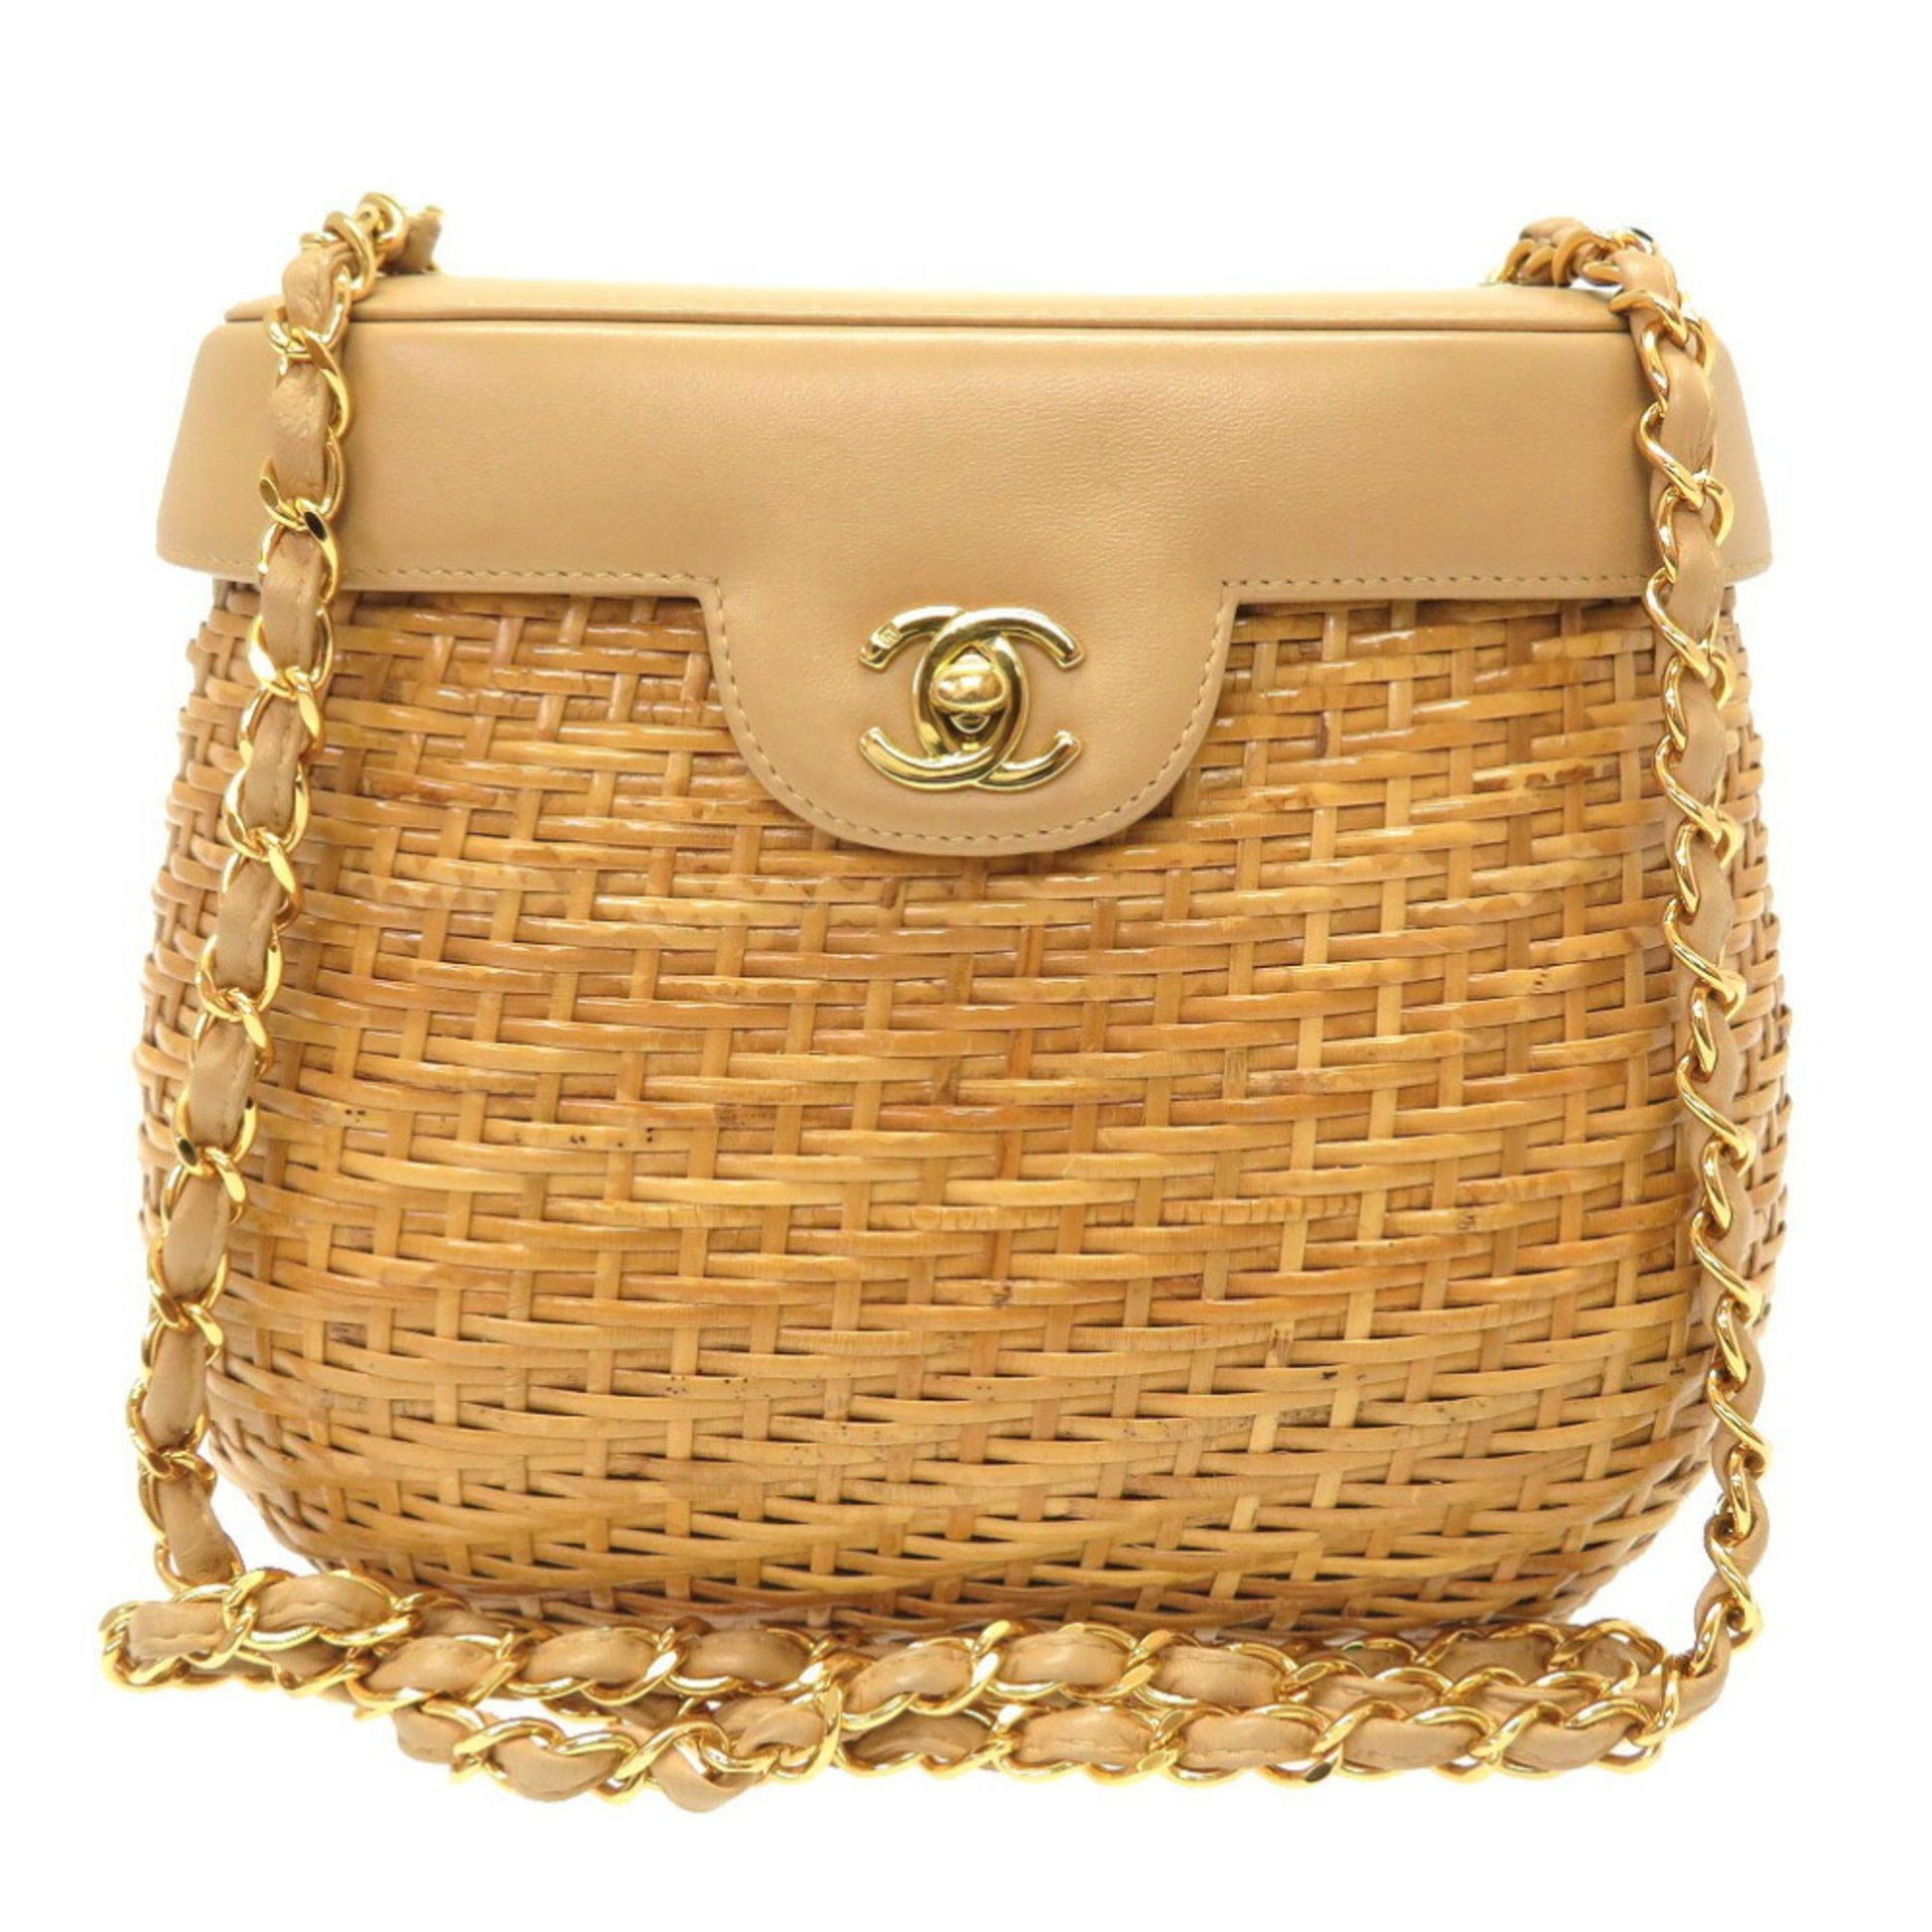 Chanel basket bag straw leather beige 5th series Coco mark turn lock s